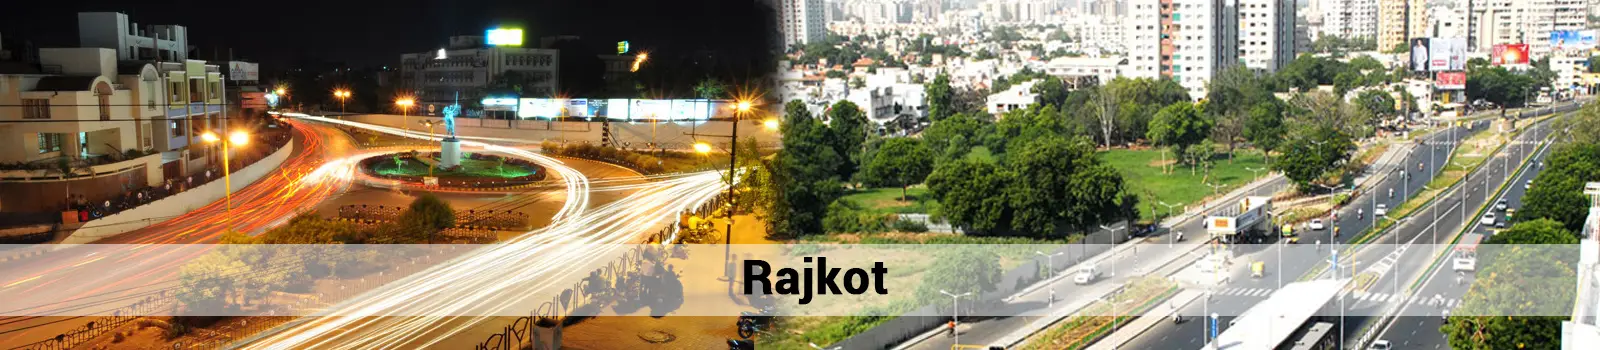 advertising agency in rajkot for clients on Billboards, Hoardings in Rajkot, Branding in Rajkot, Digital Signage Kiosks